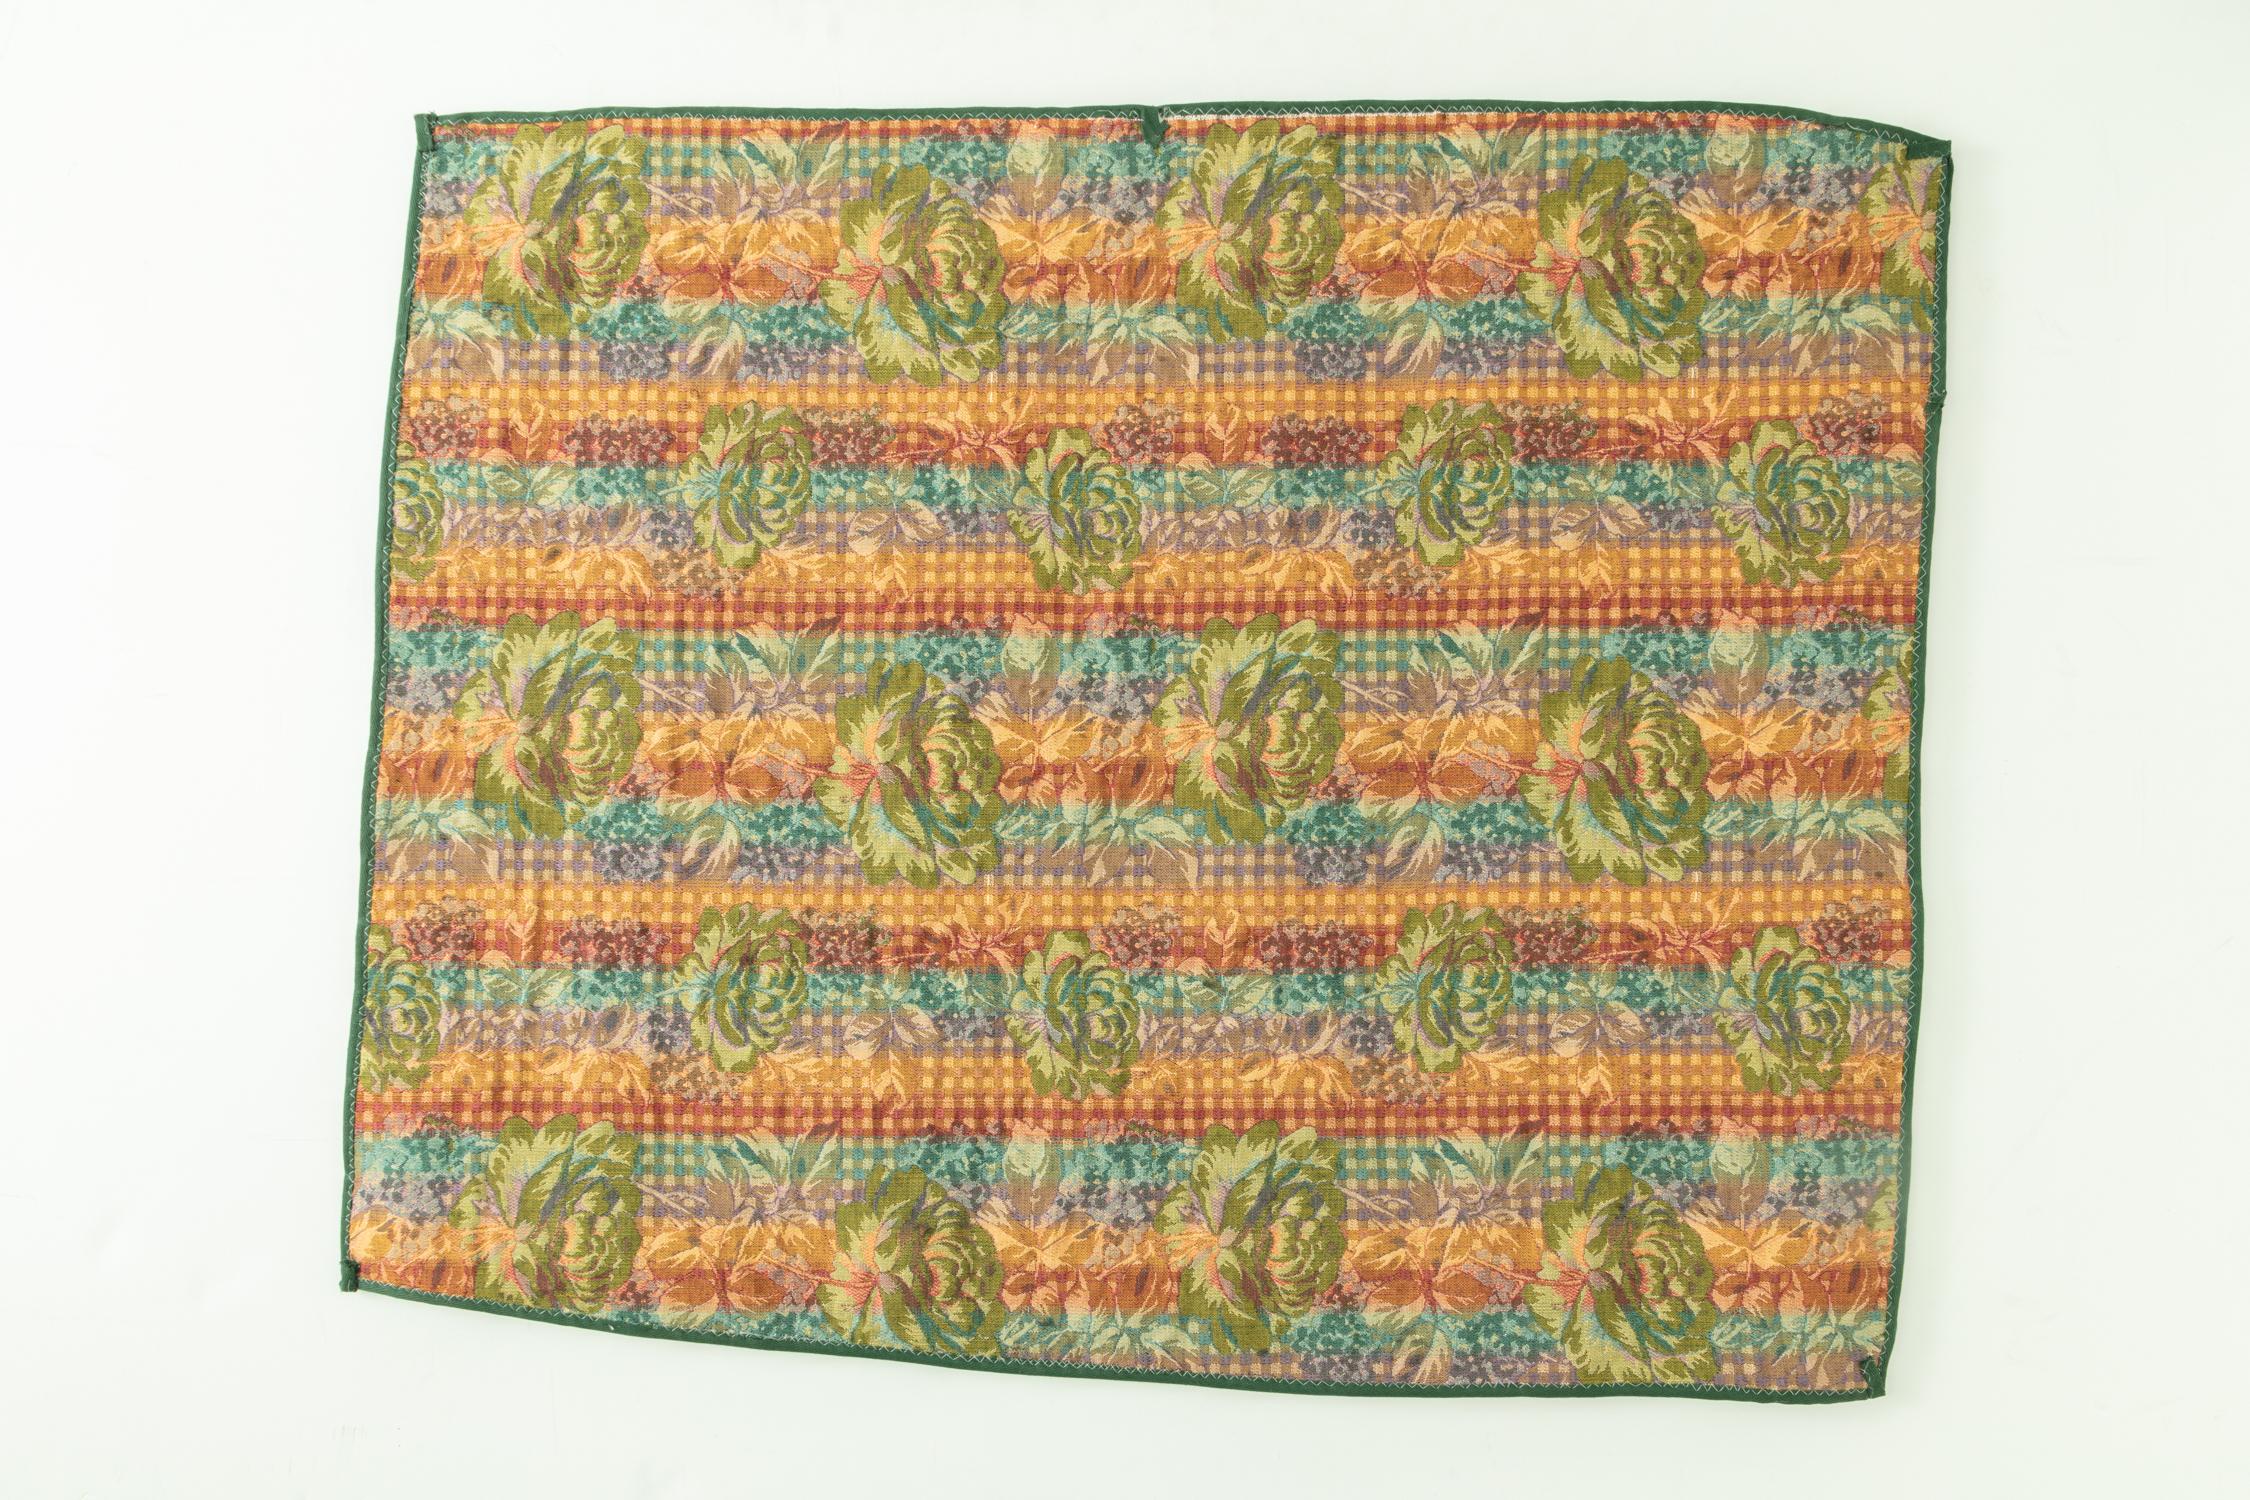 Hand Tufted shag rug by Madeline Tavernier

2022

Materials: acrylic & wool yarns

Dimensions: 34